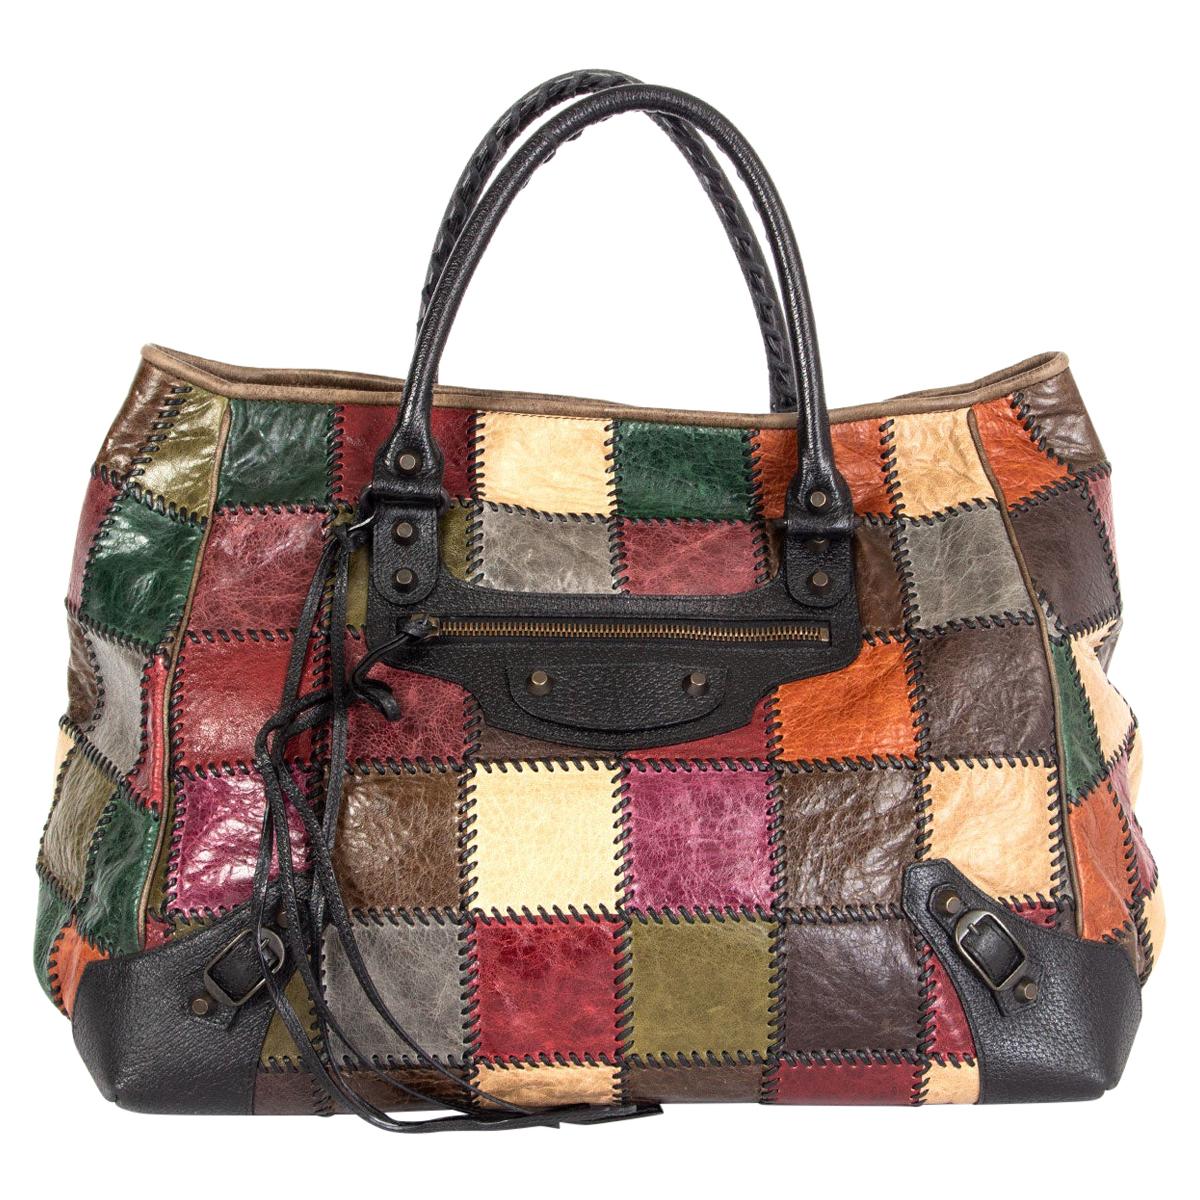 BALENCIAGA multicolor leather ARENA LARGE PATCHWORK Tote Bag